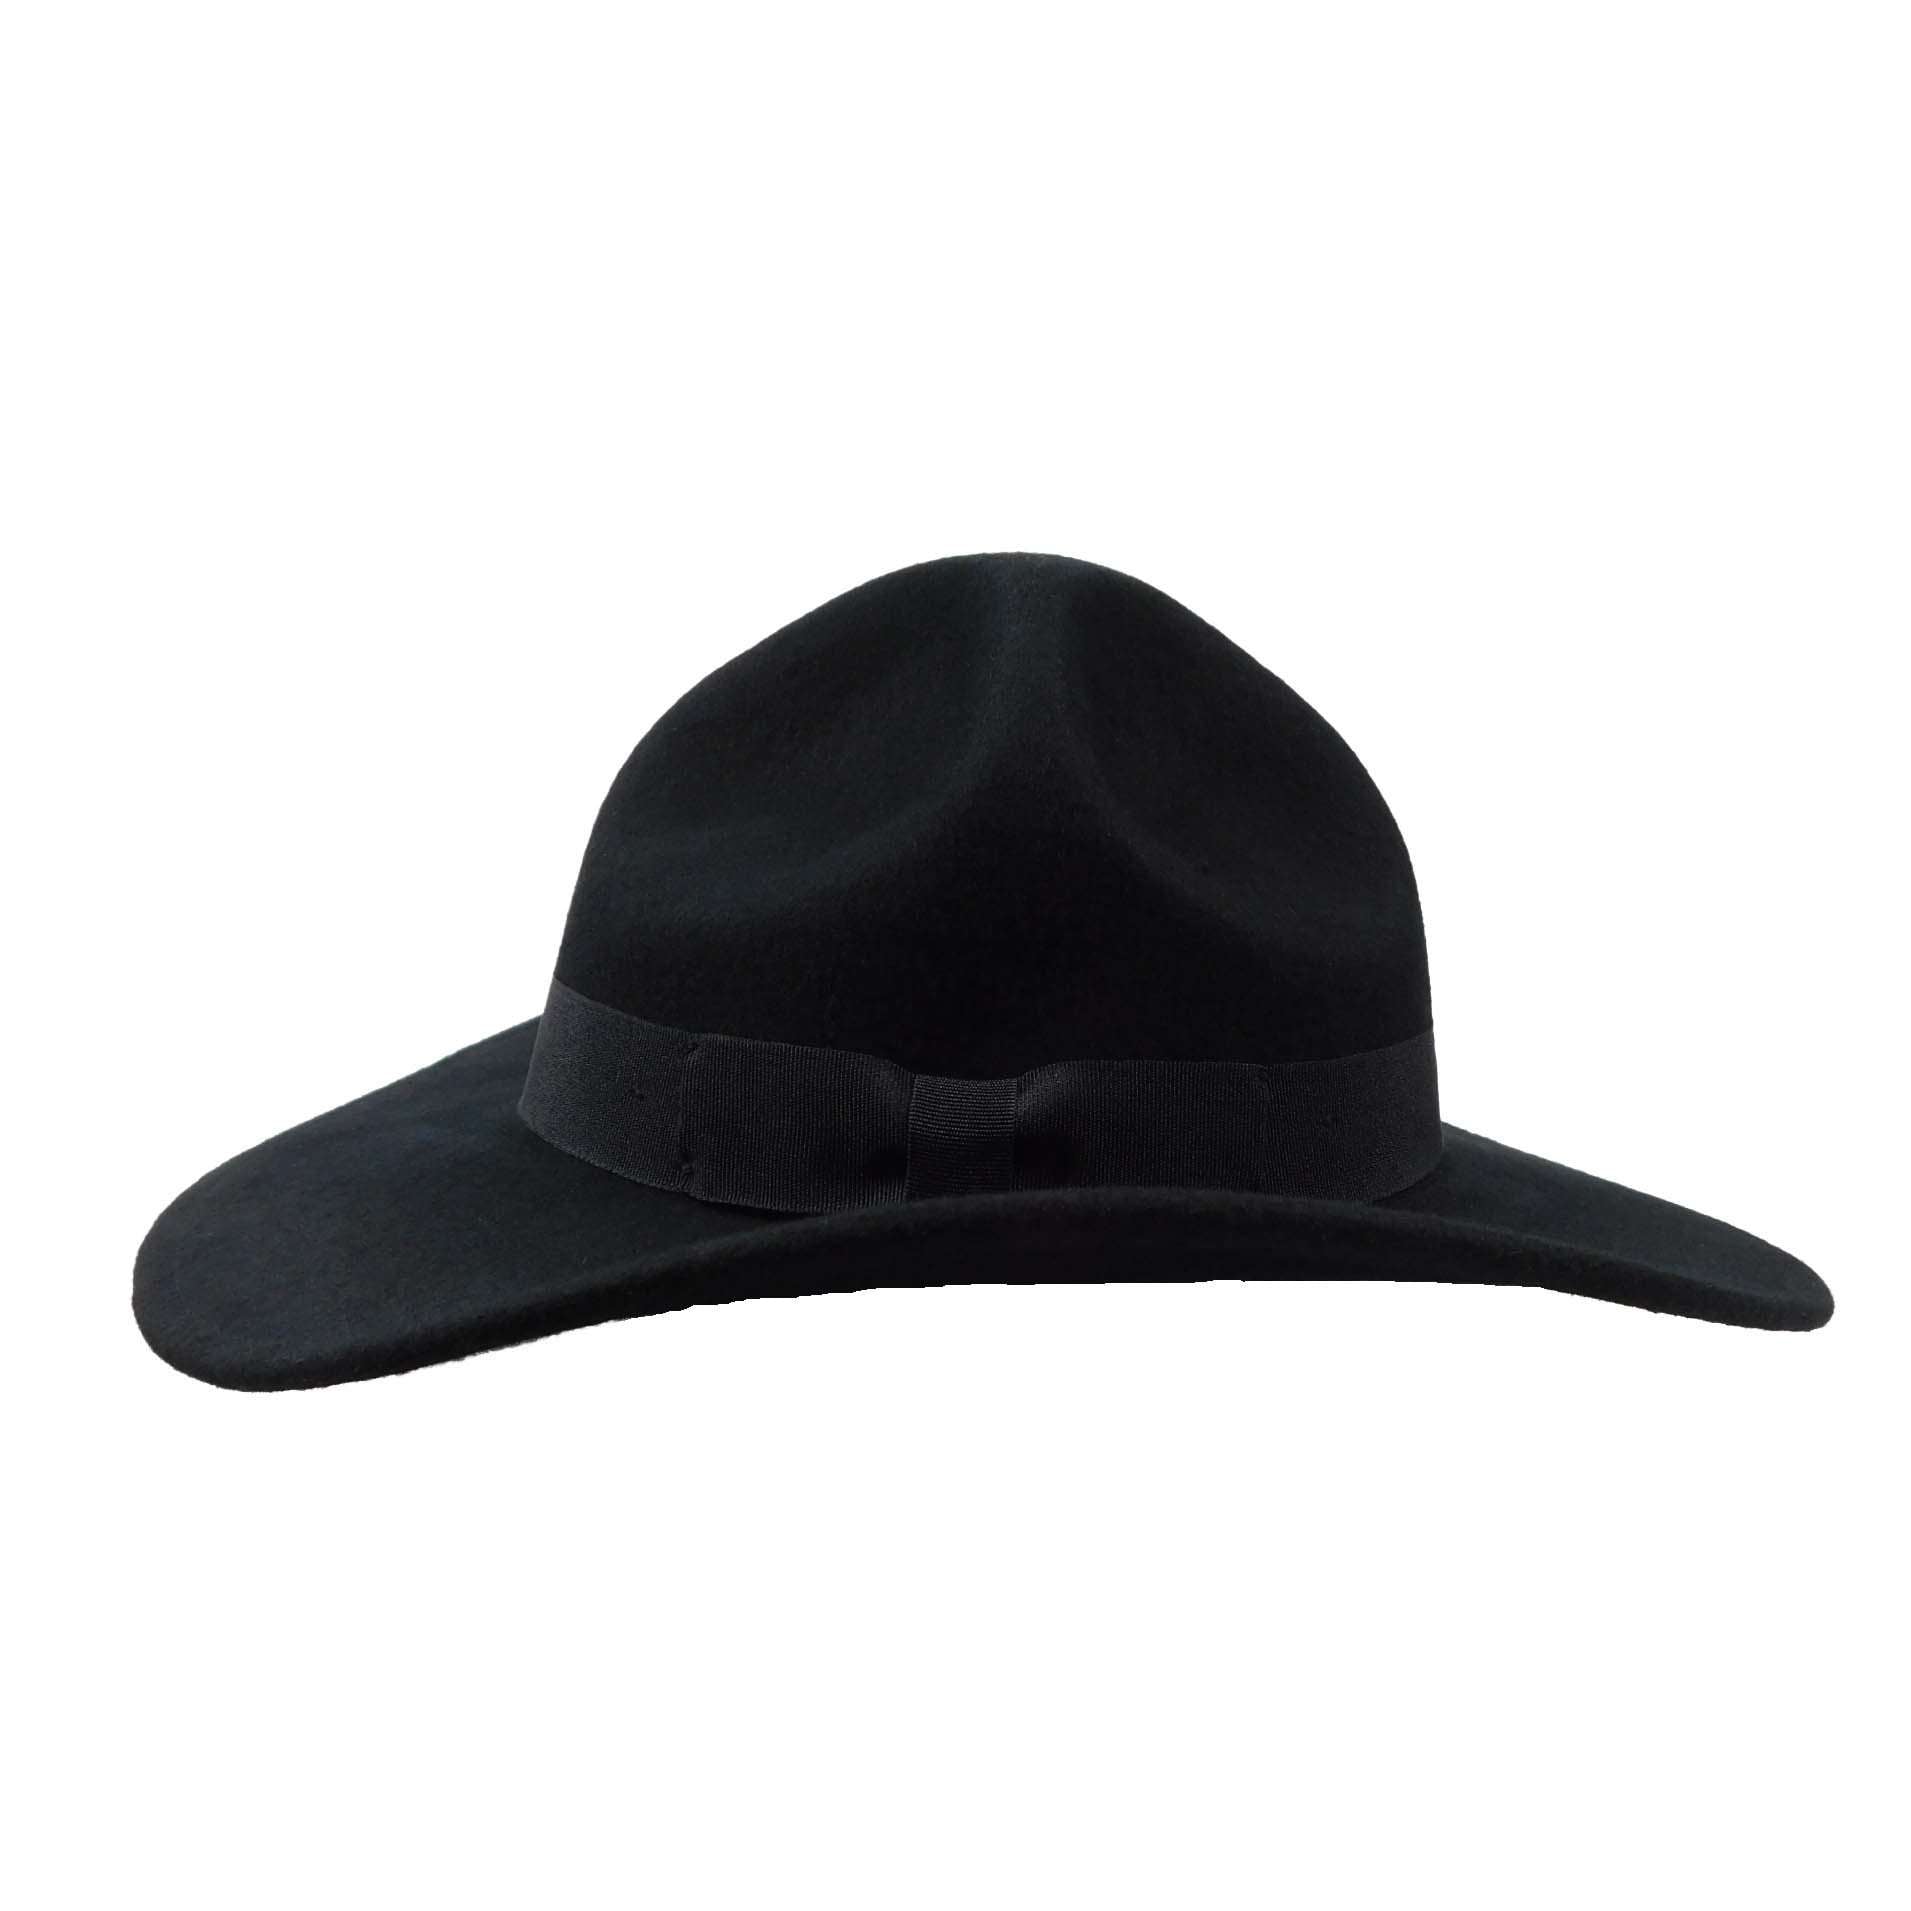 Merino Wool Felt Campaign Hat Cowboy Hat Epoch Hats MWWF977BKS Black S/M 